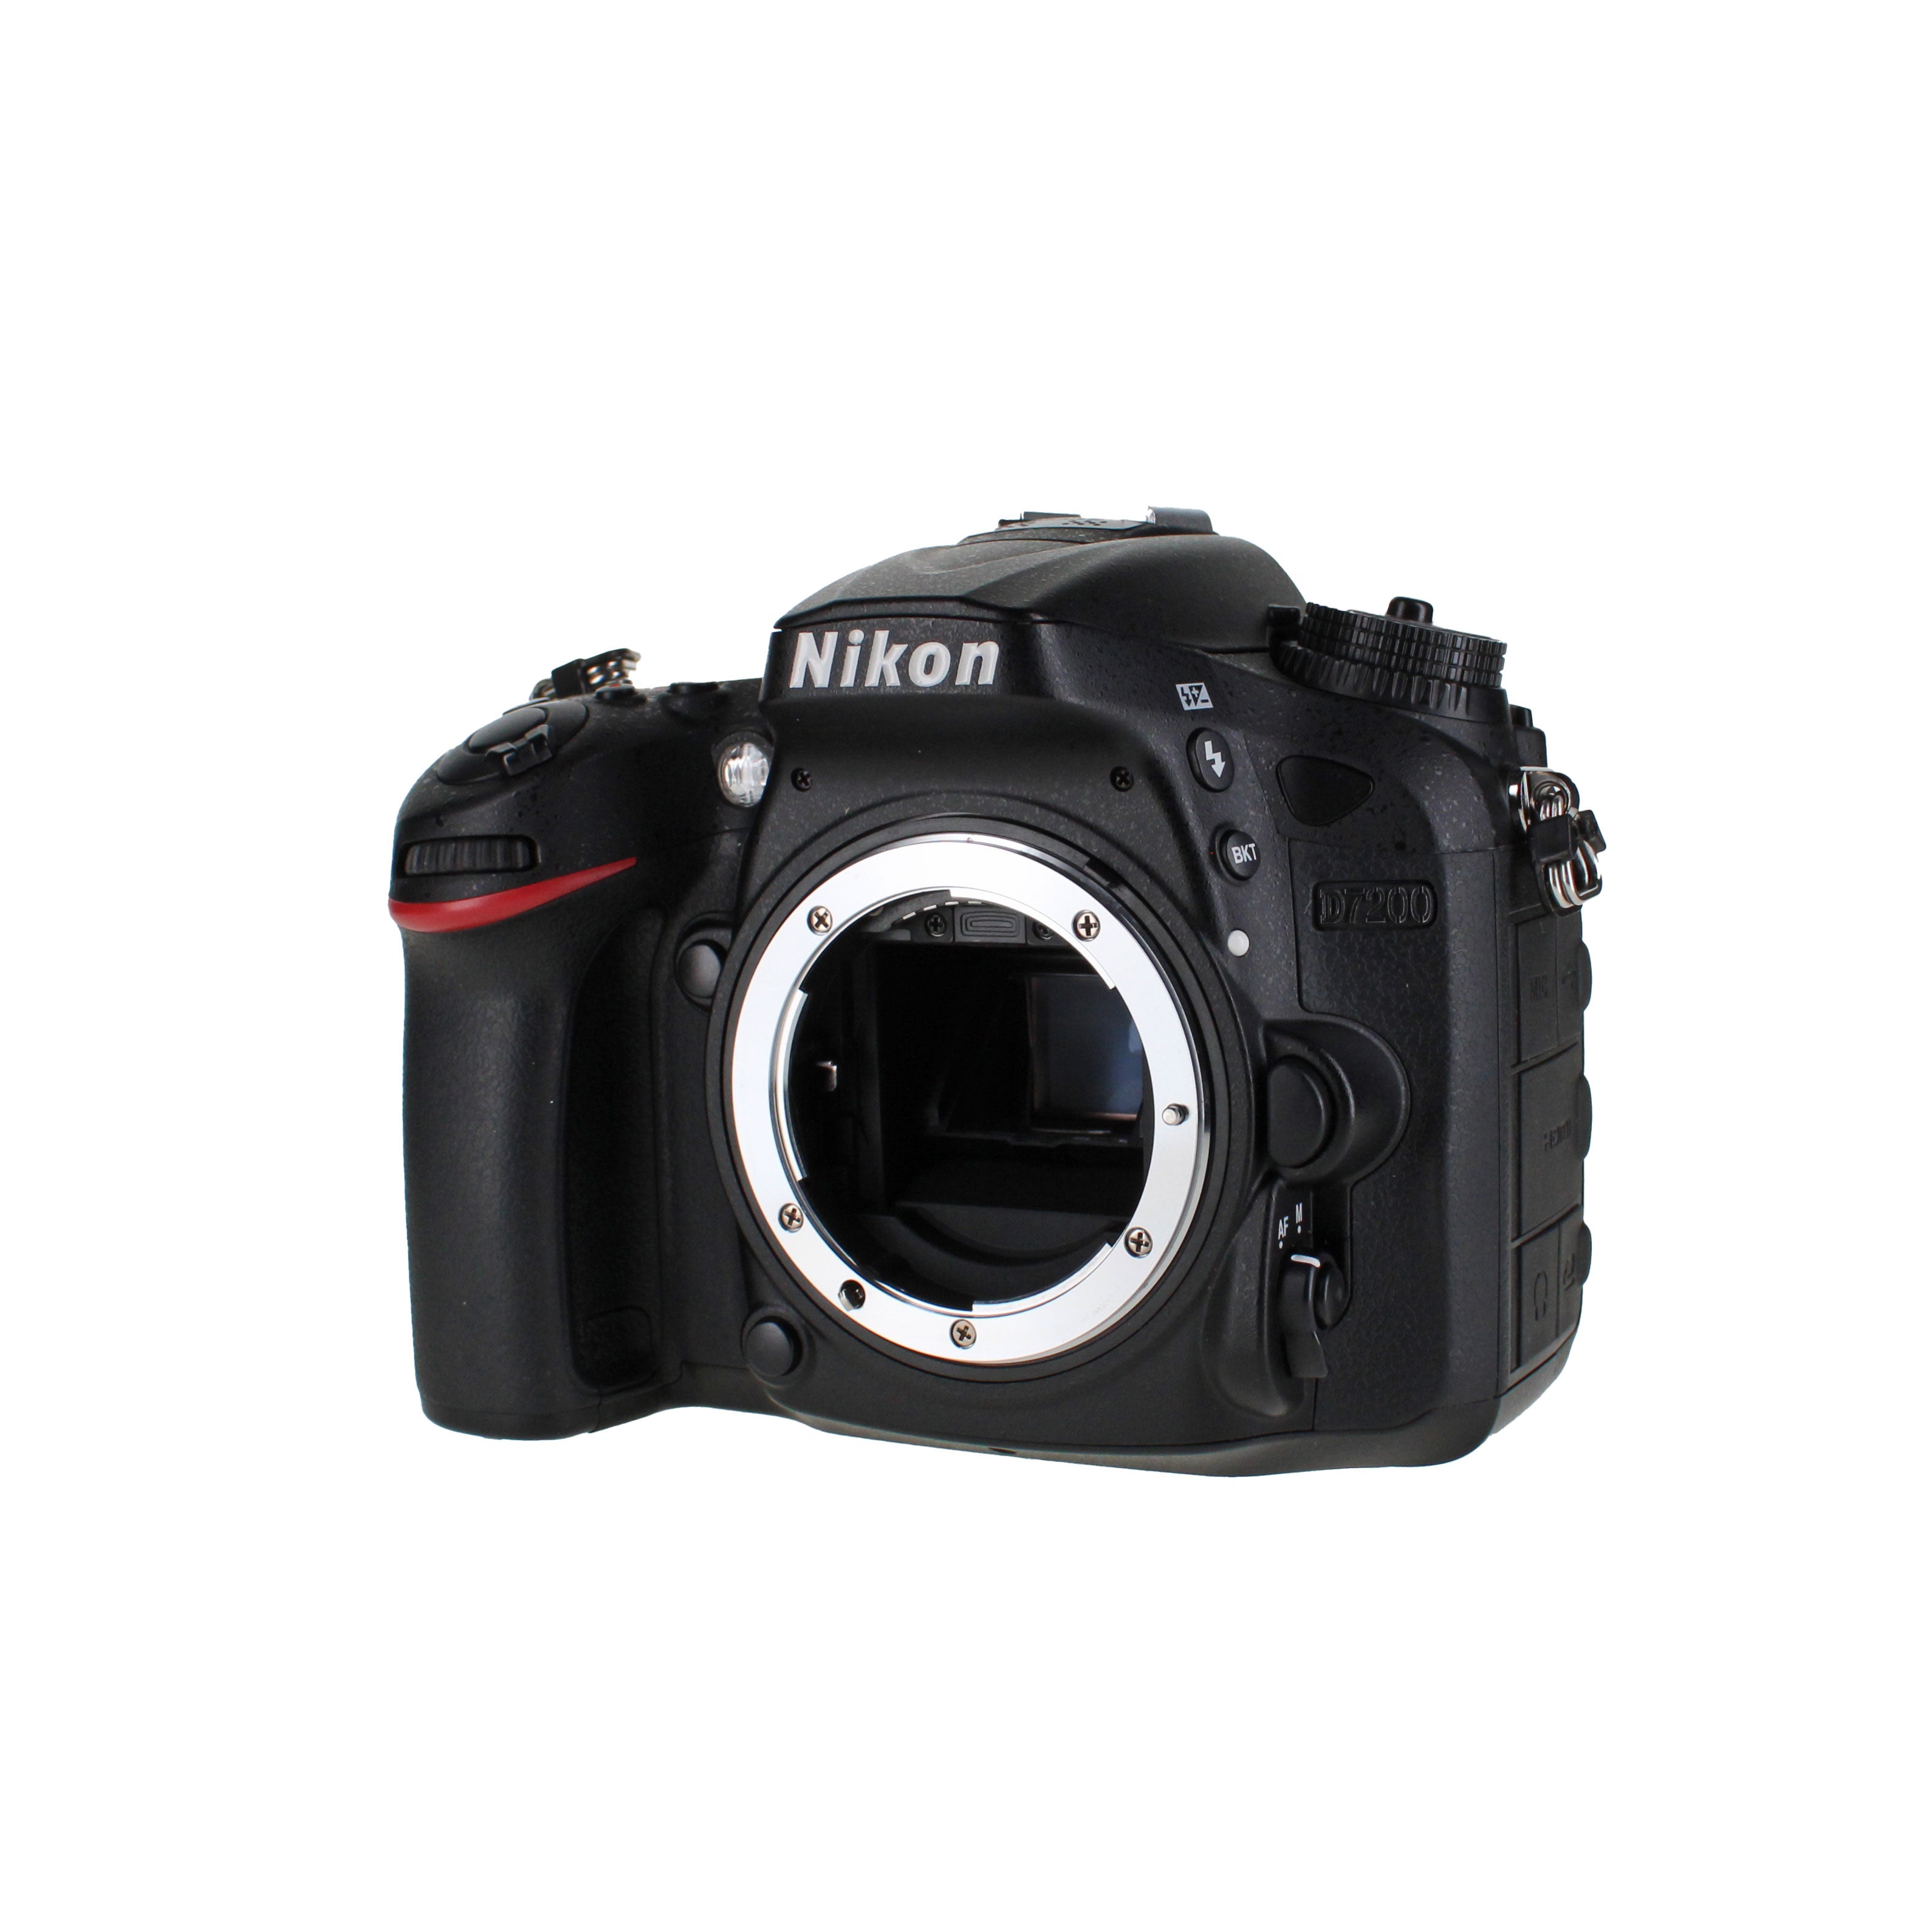 Nikon D7200 Digital Camera F Mount (Body Only) - International Version (No Warranty)